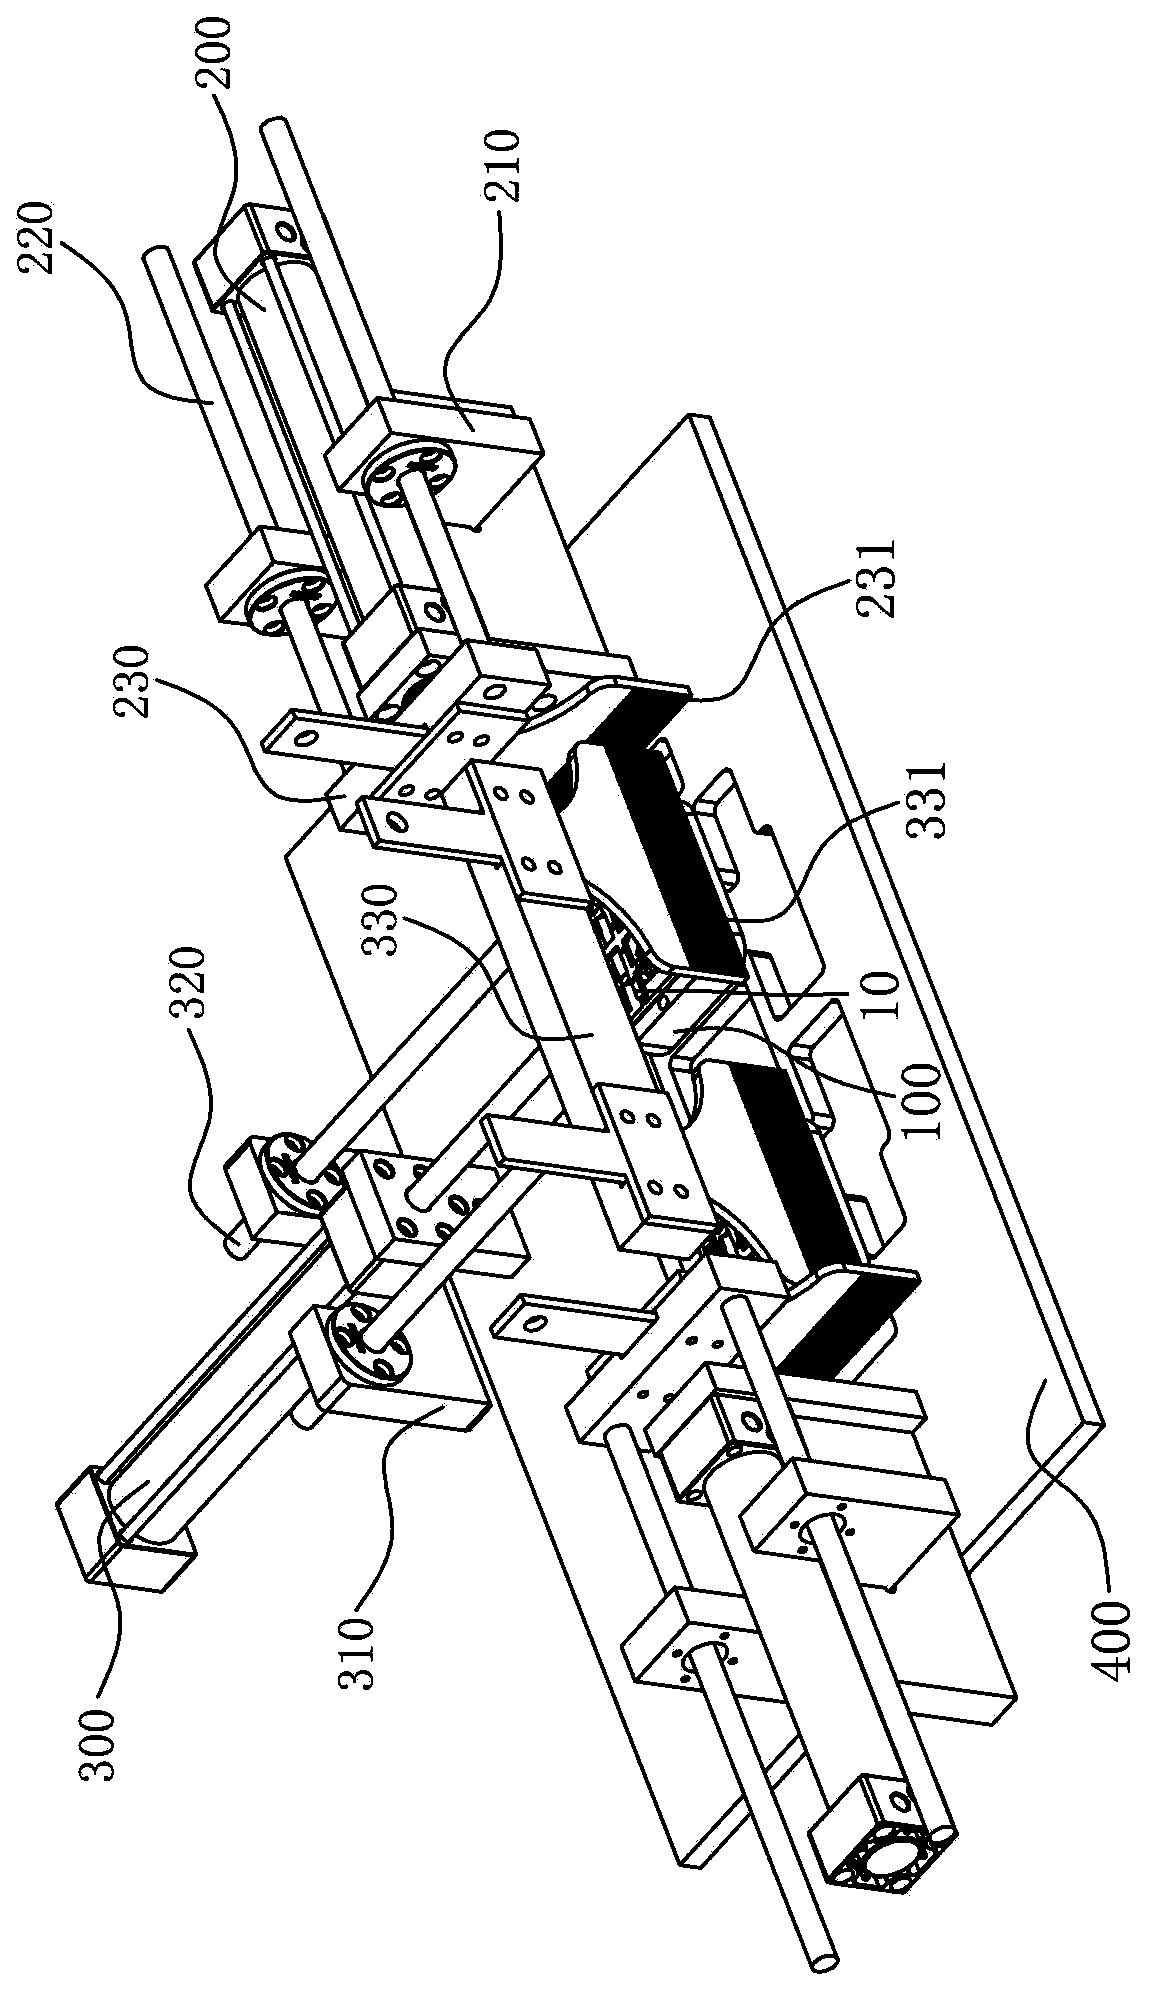 Automatic dedusting mechanism